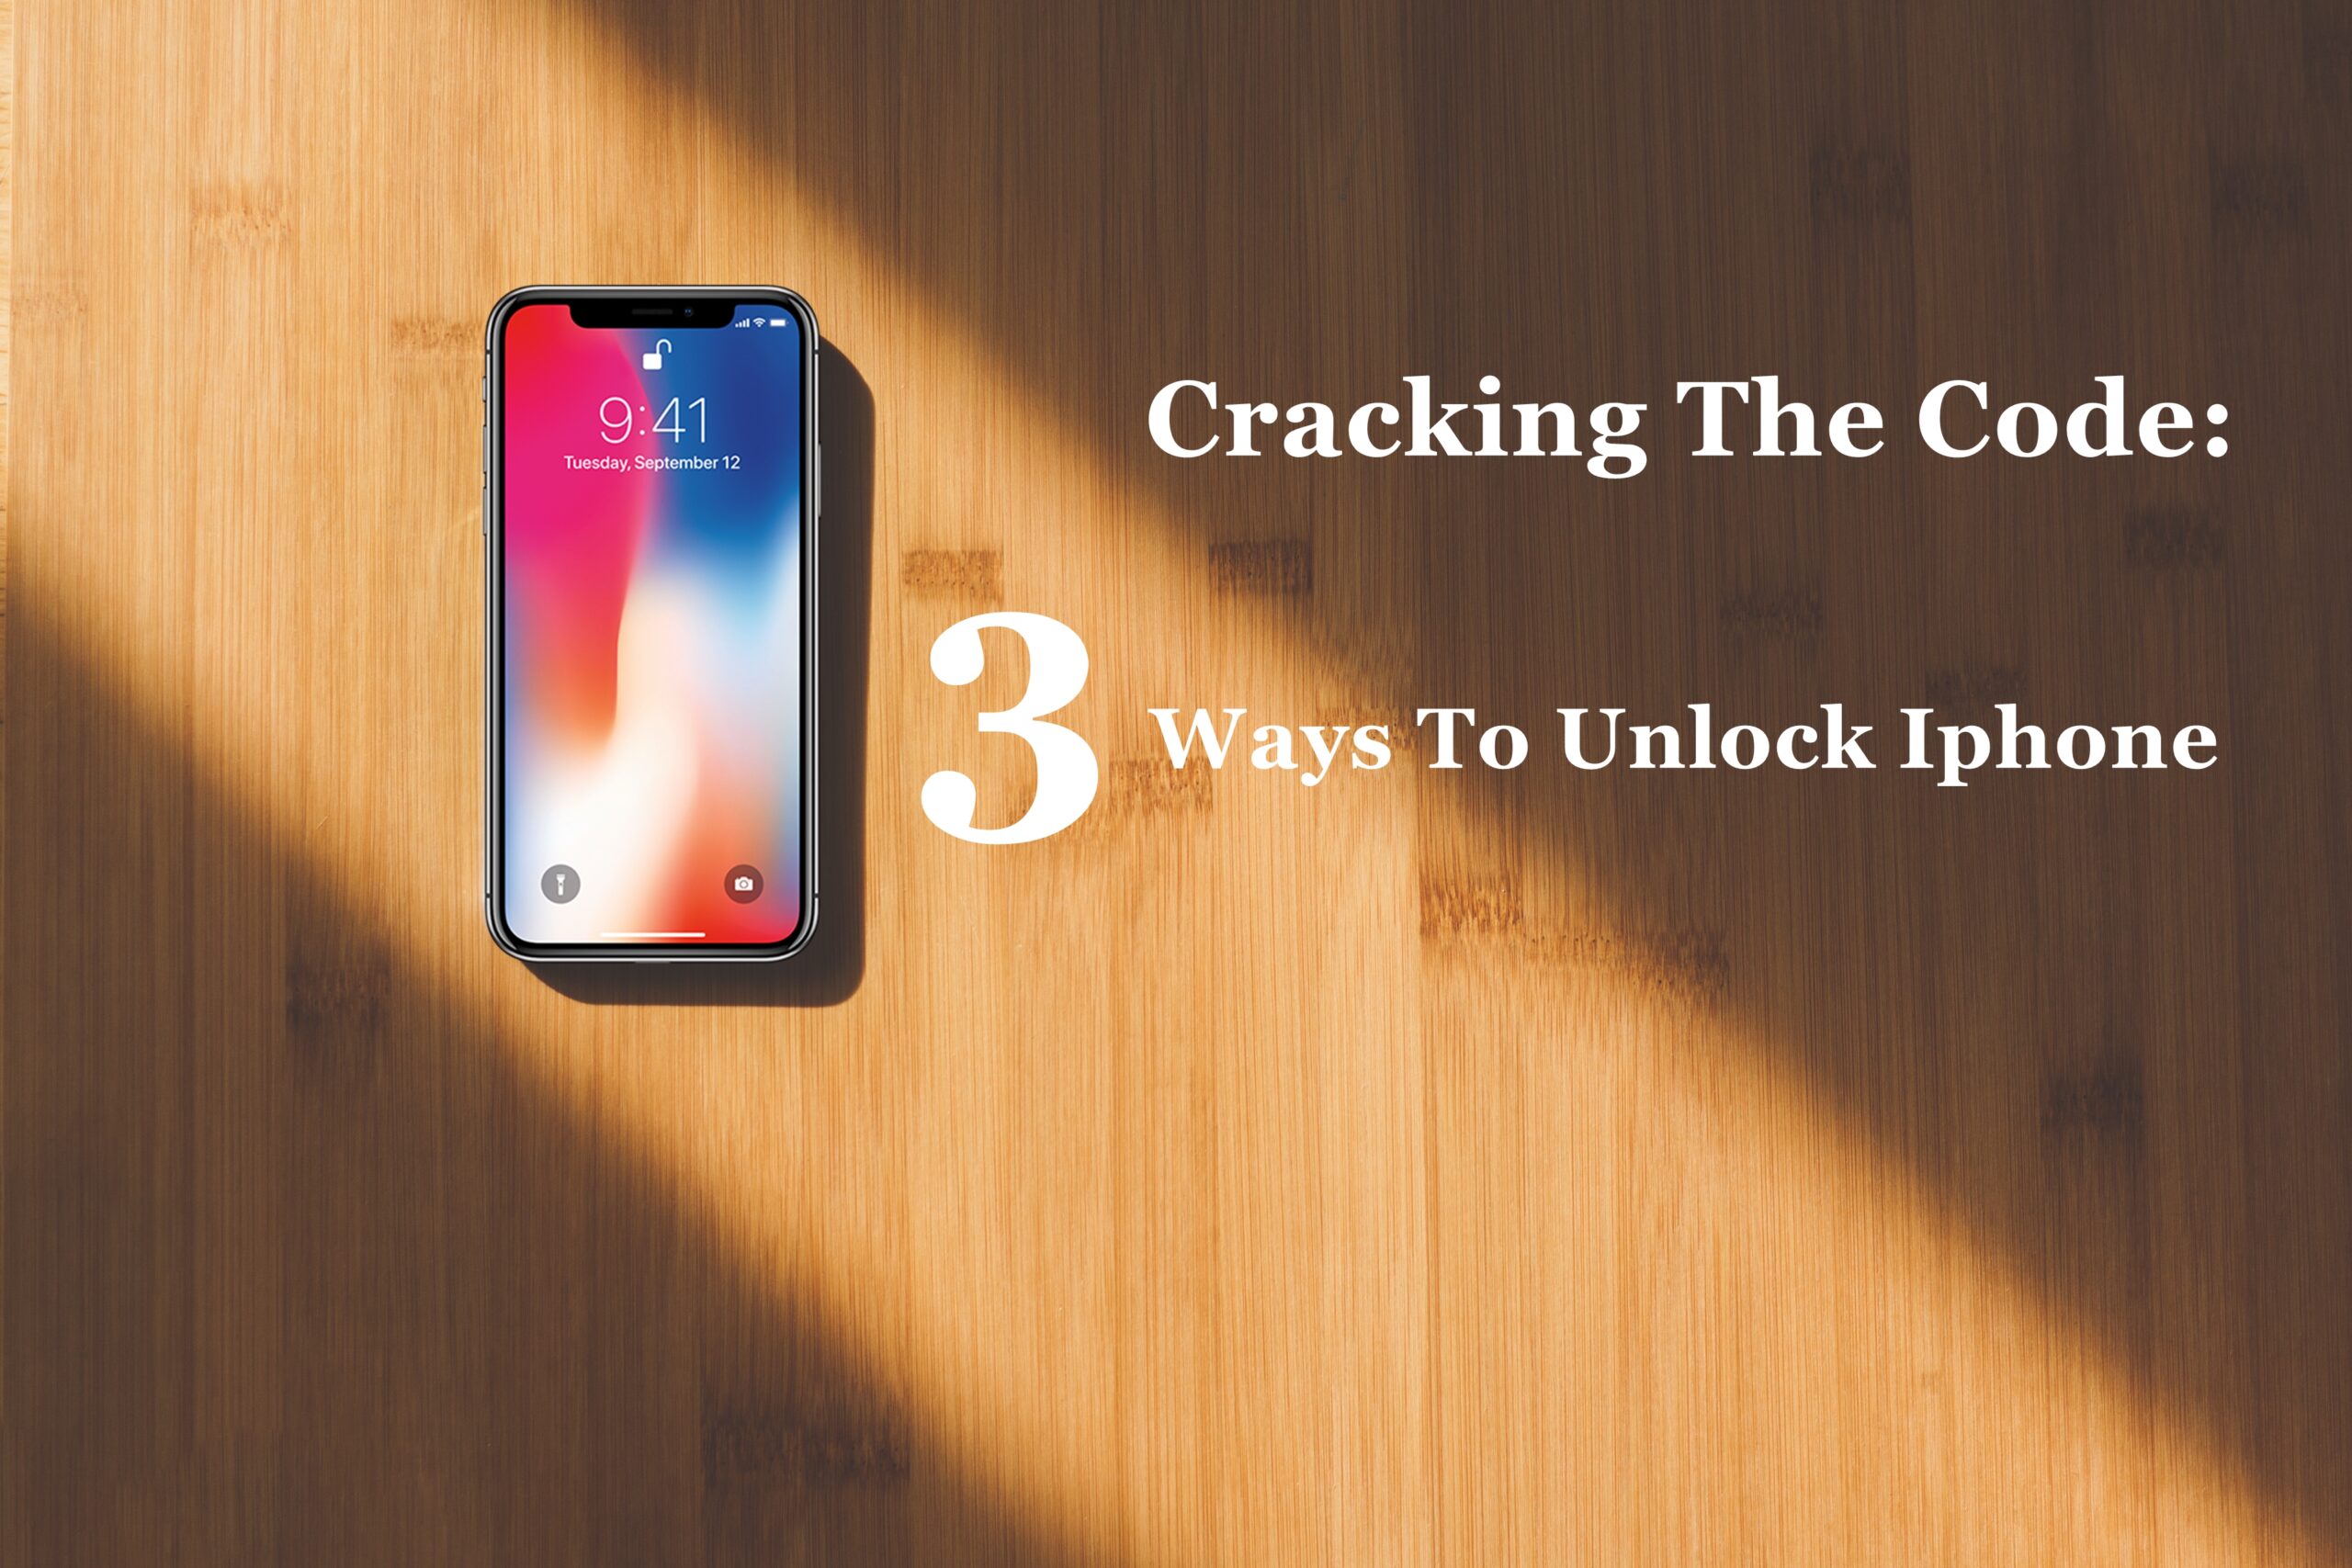 Cracking The Code: 3 Ways To Unlock Iphone